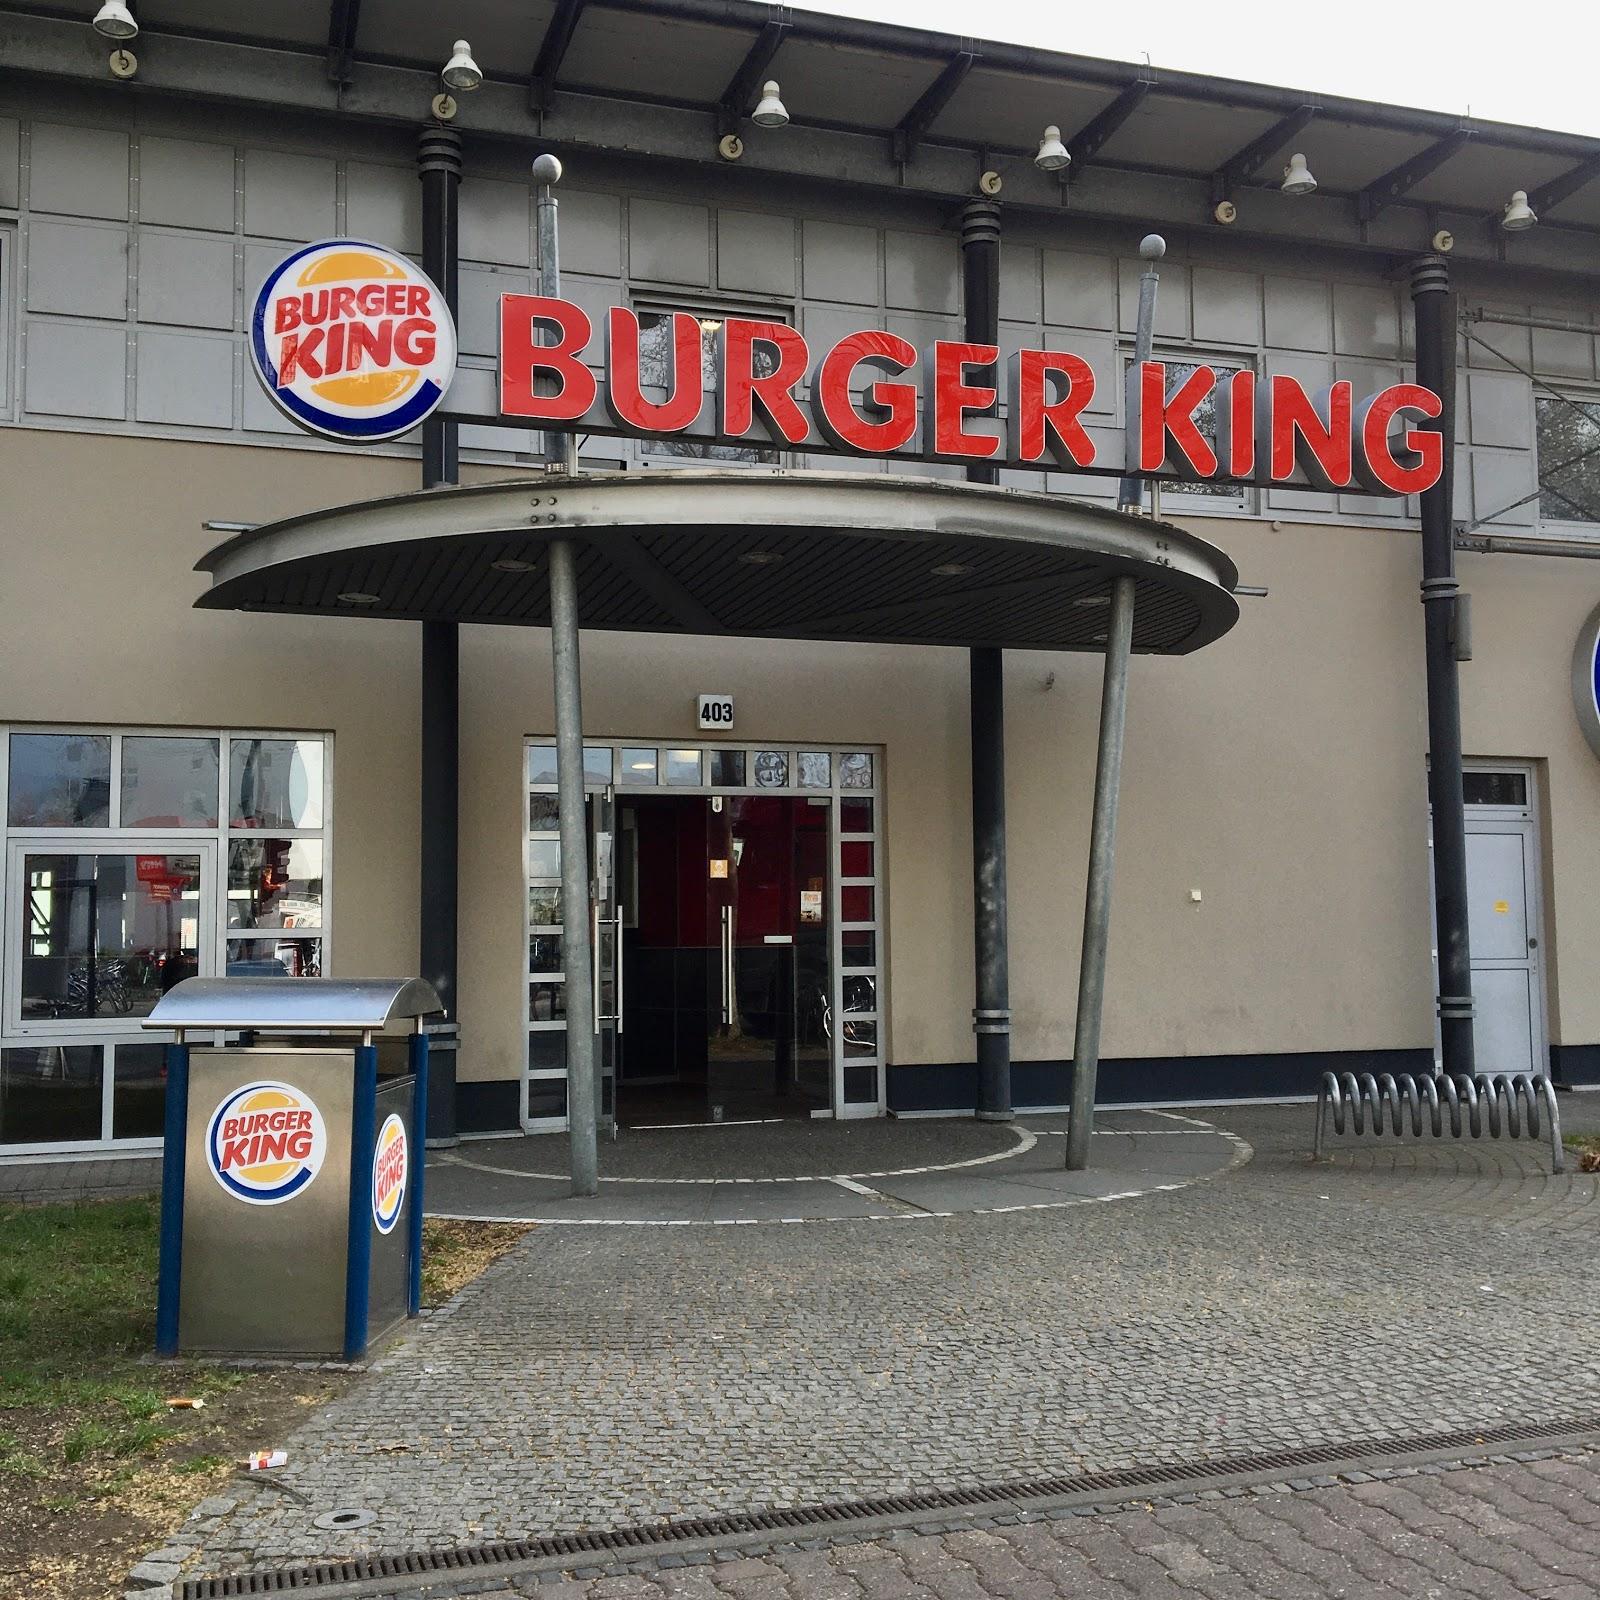 Restaurant "Burger King Frankfurt Main" in Frankfurt am Main